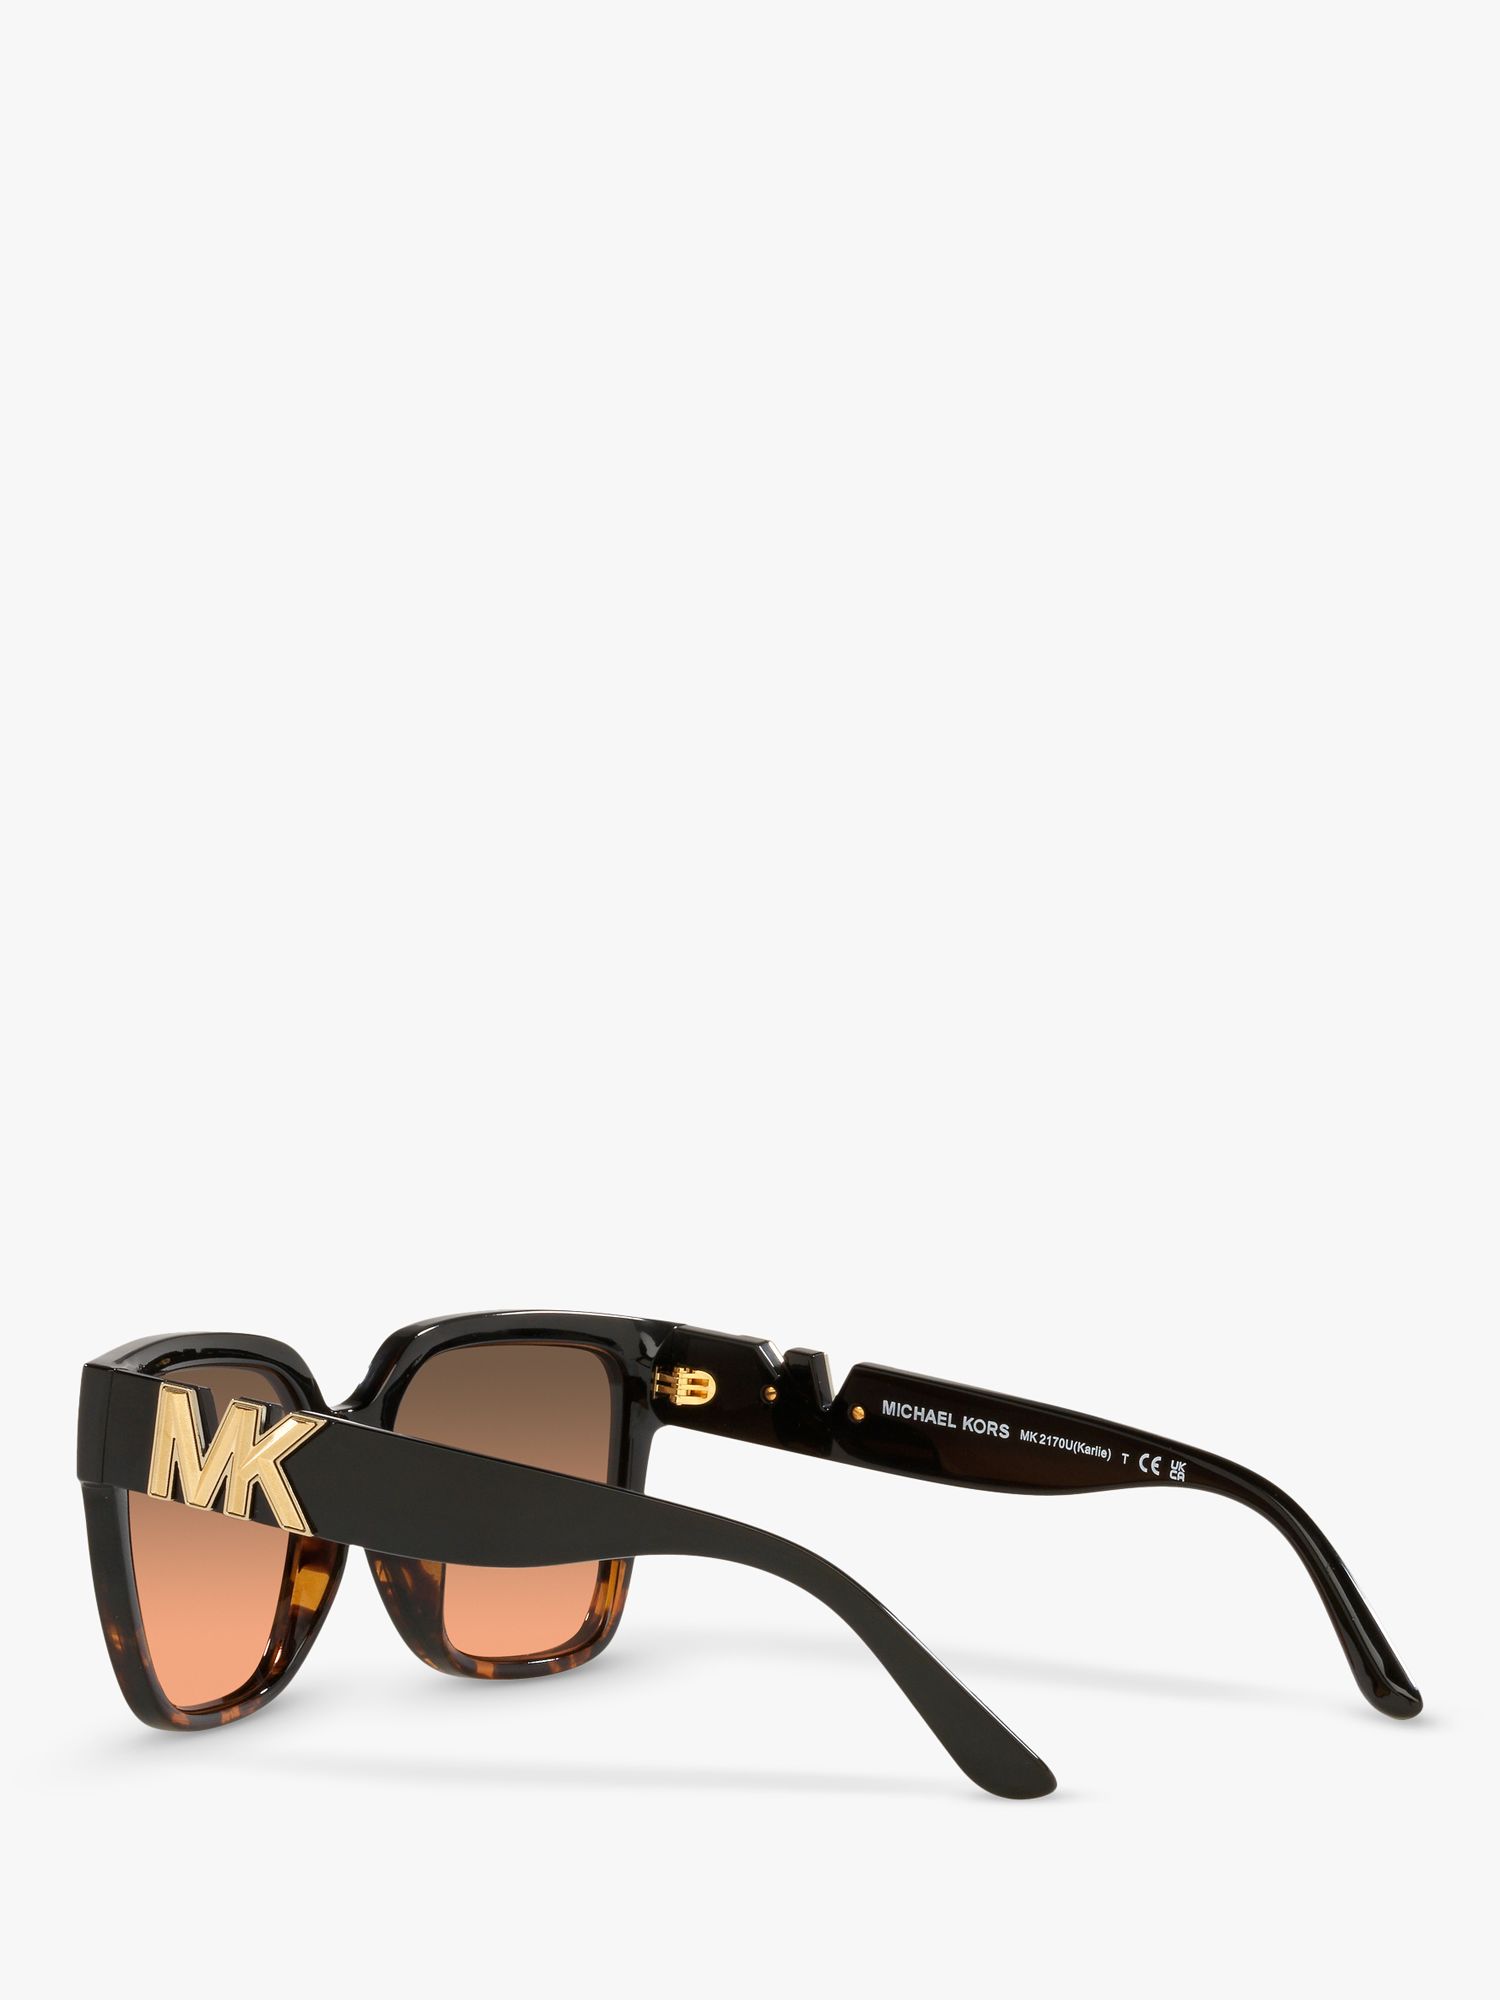 Michael Kors Mk2170u Women S Karlie Square Sunglasses Black Dark